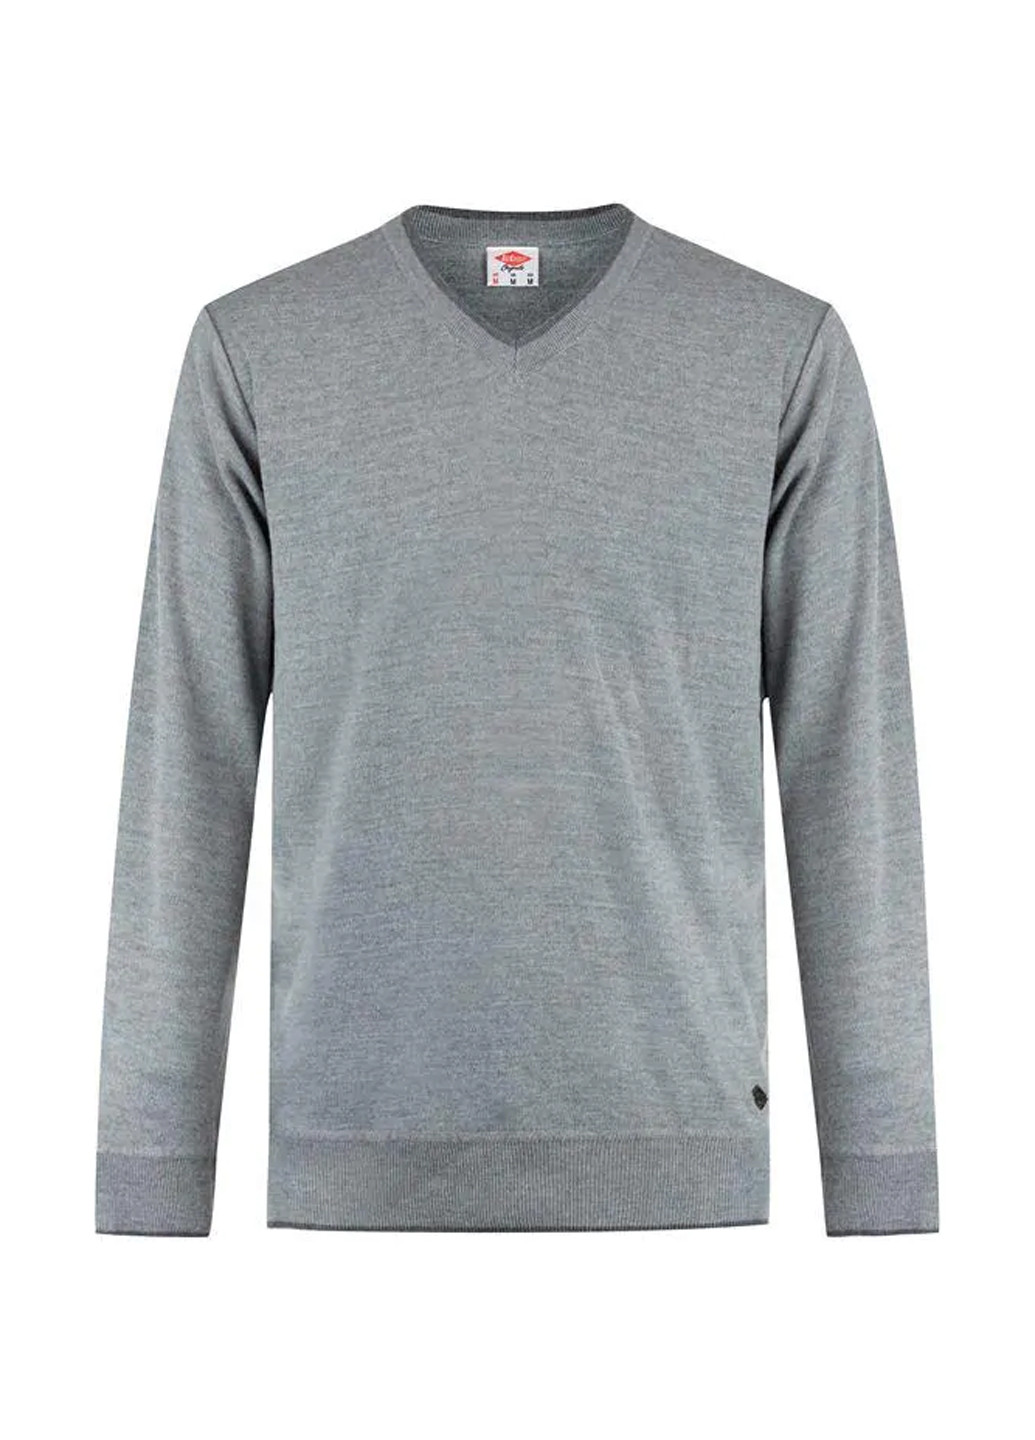 Серый демисезонный пуловер пуловер Lee Cooper